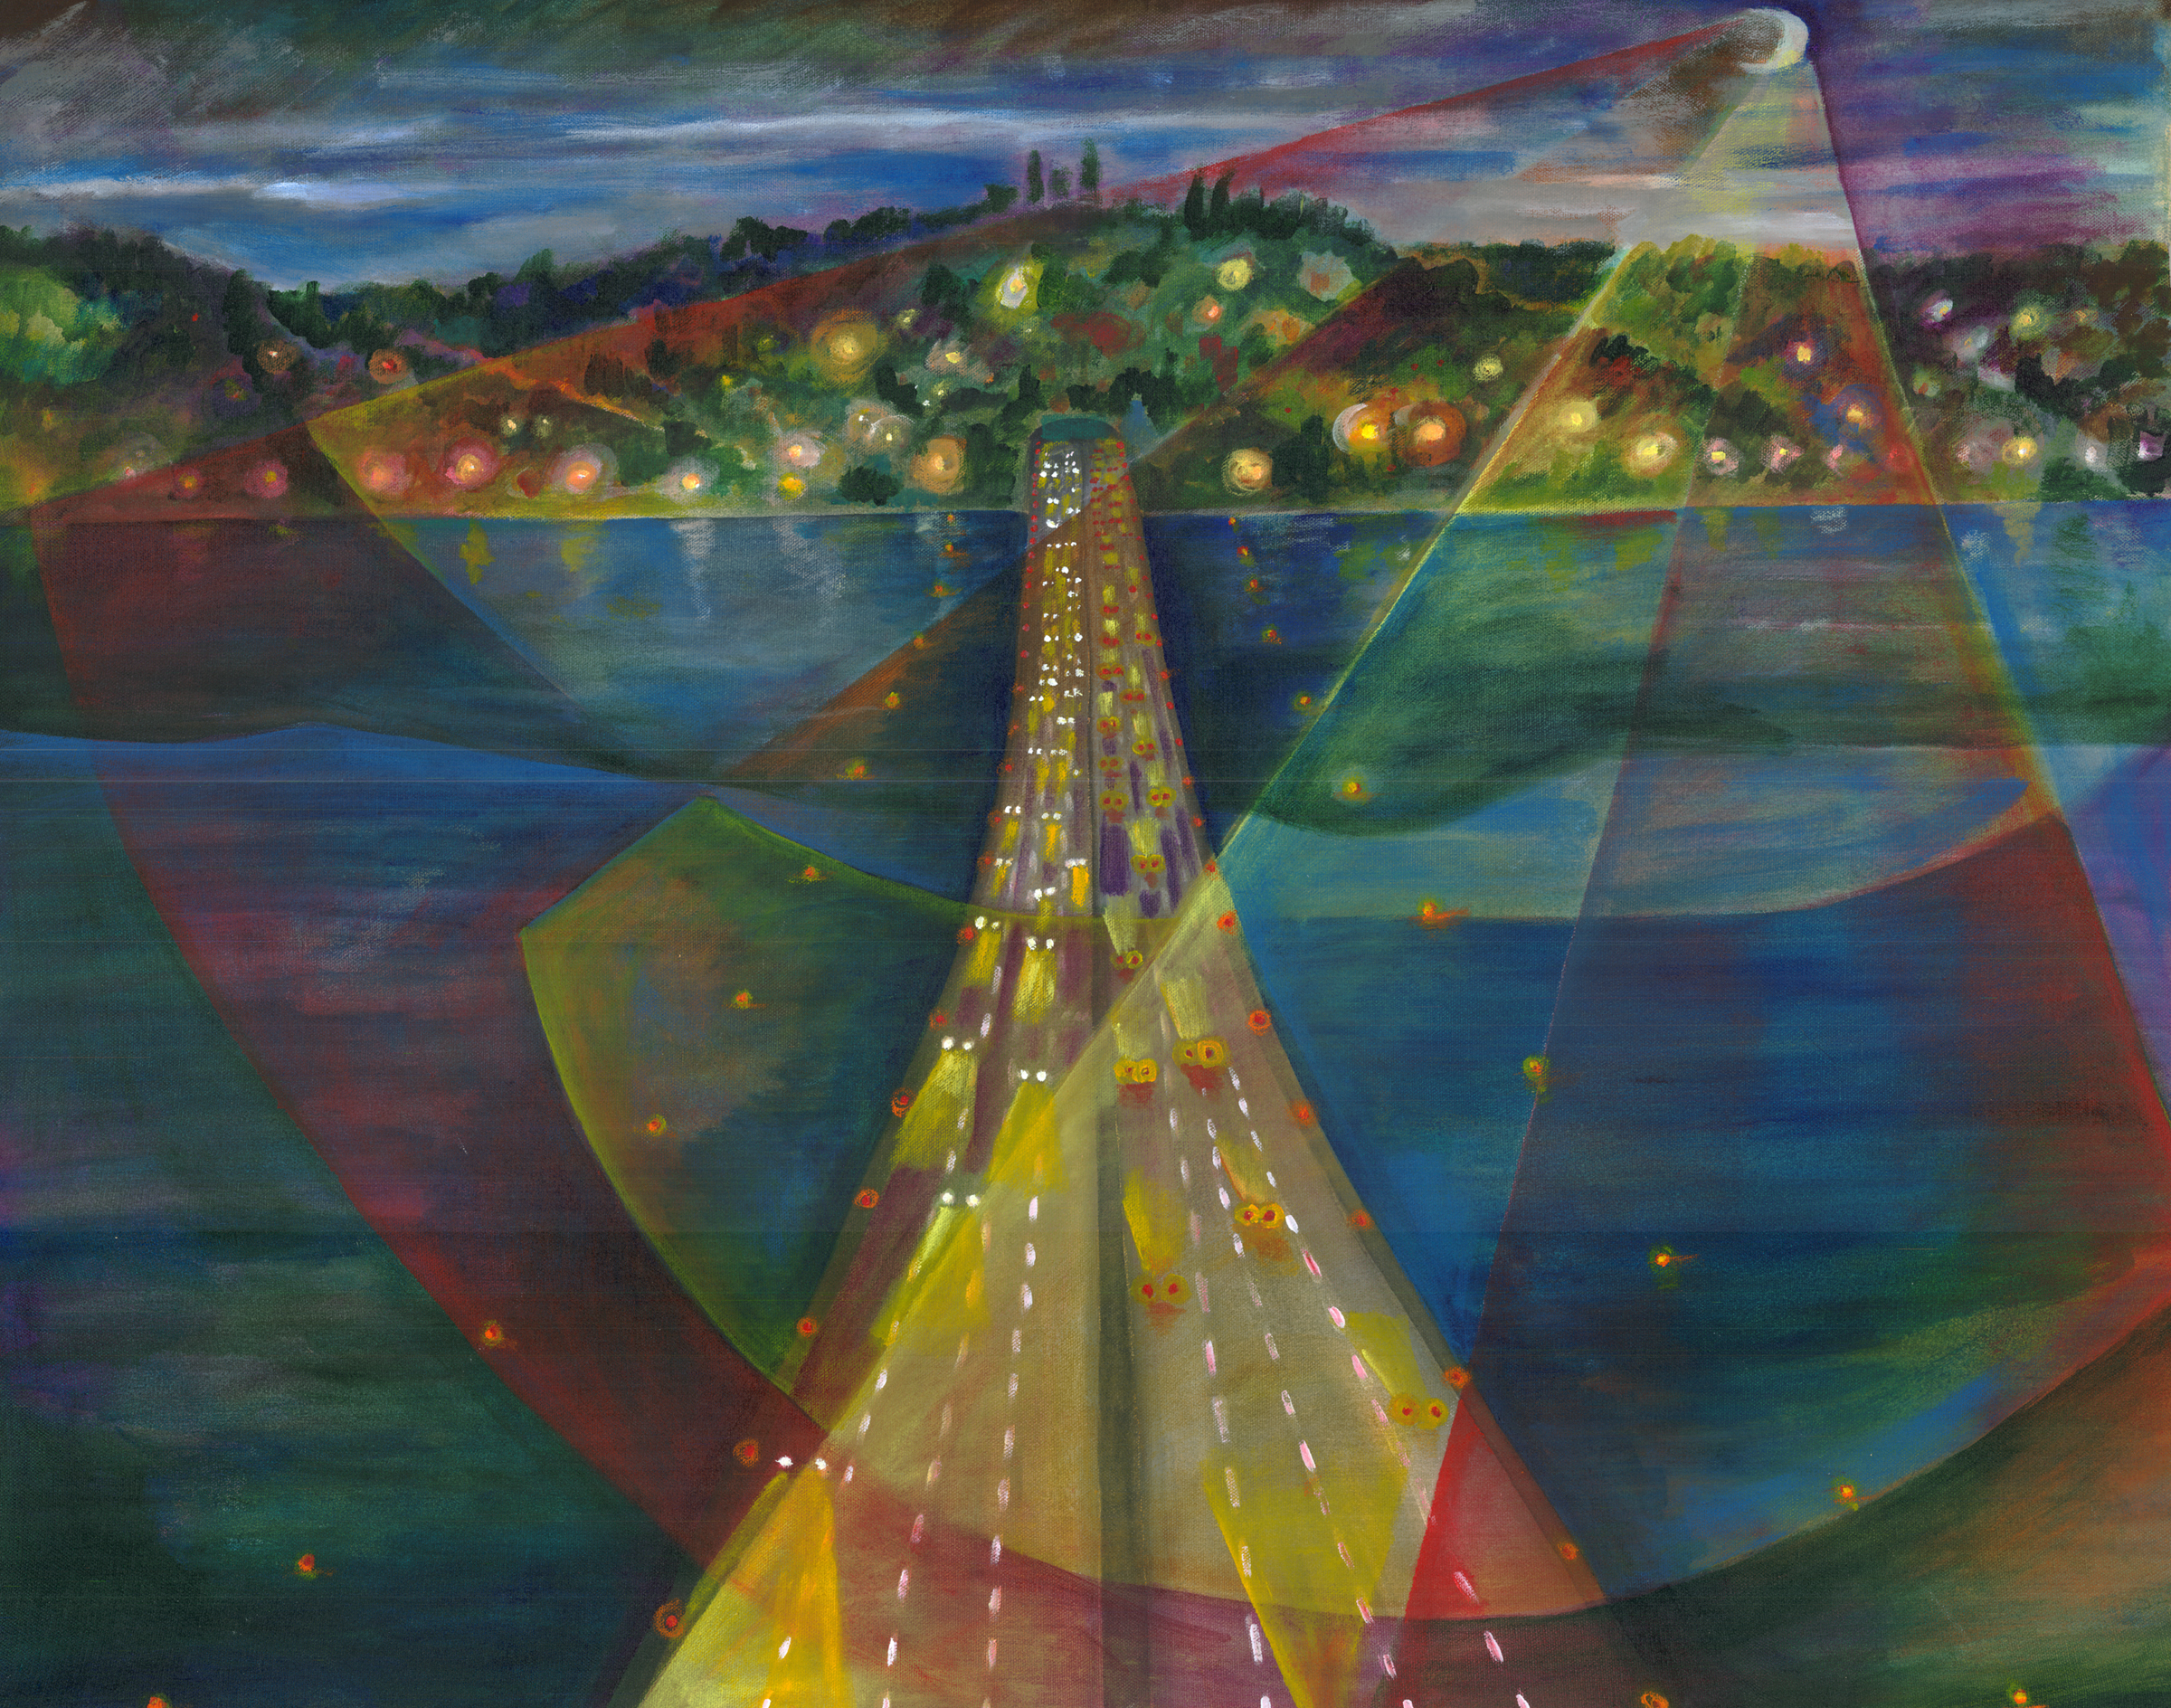  "I90 Bridge", acrylic on canvas, 32"x 27",​ 2004  